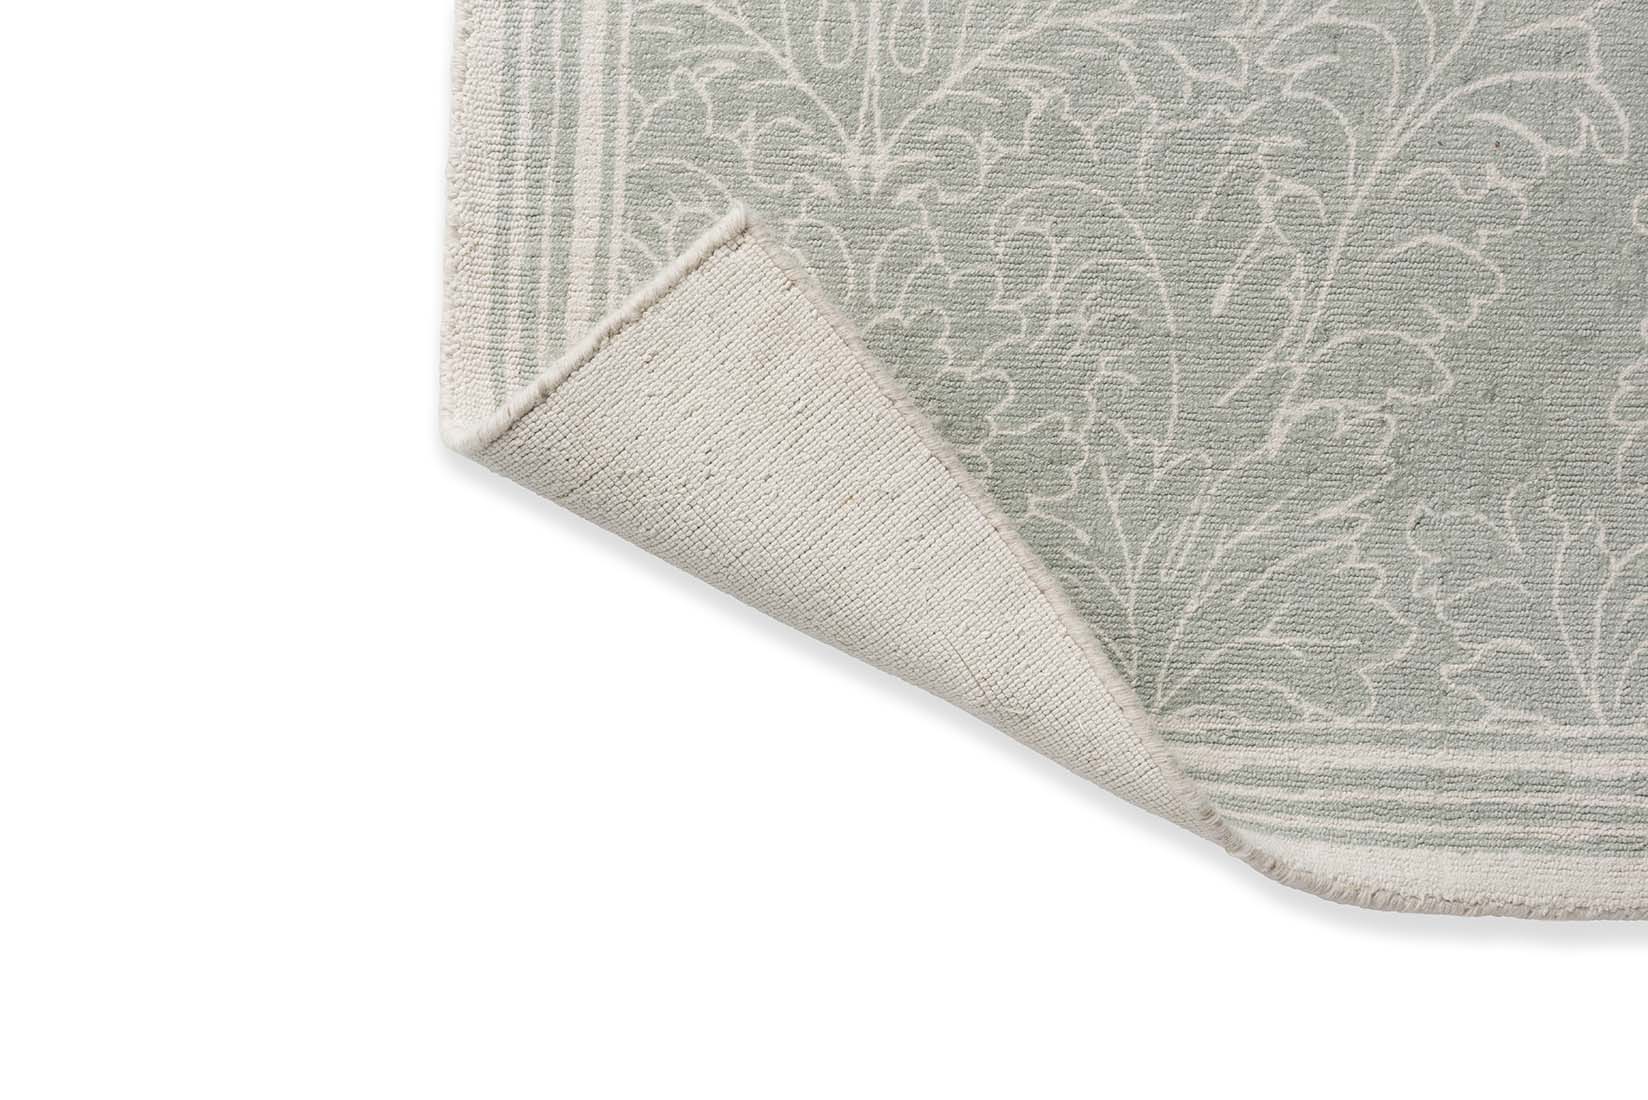 Green cotton rug in damask pattern
